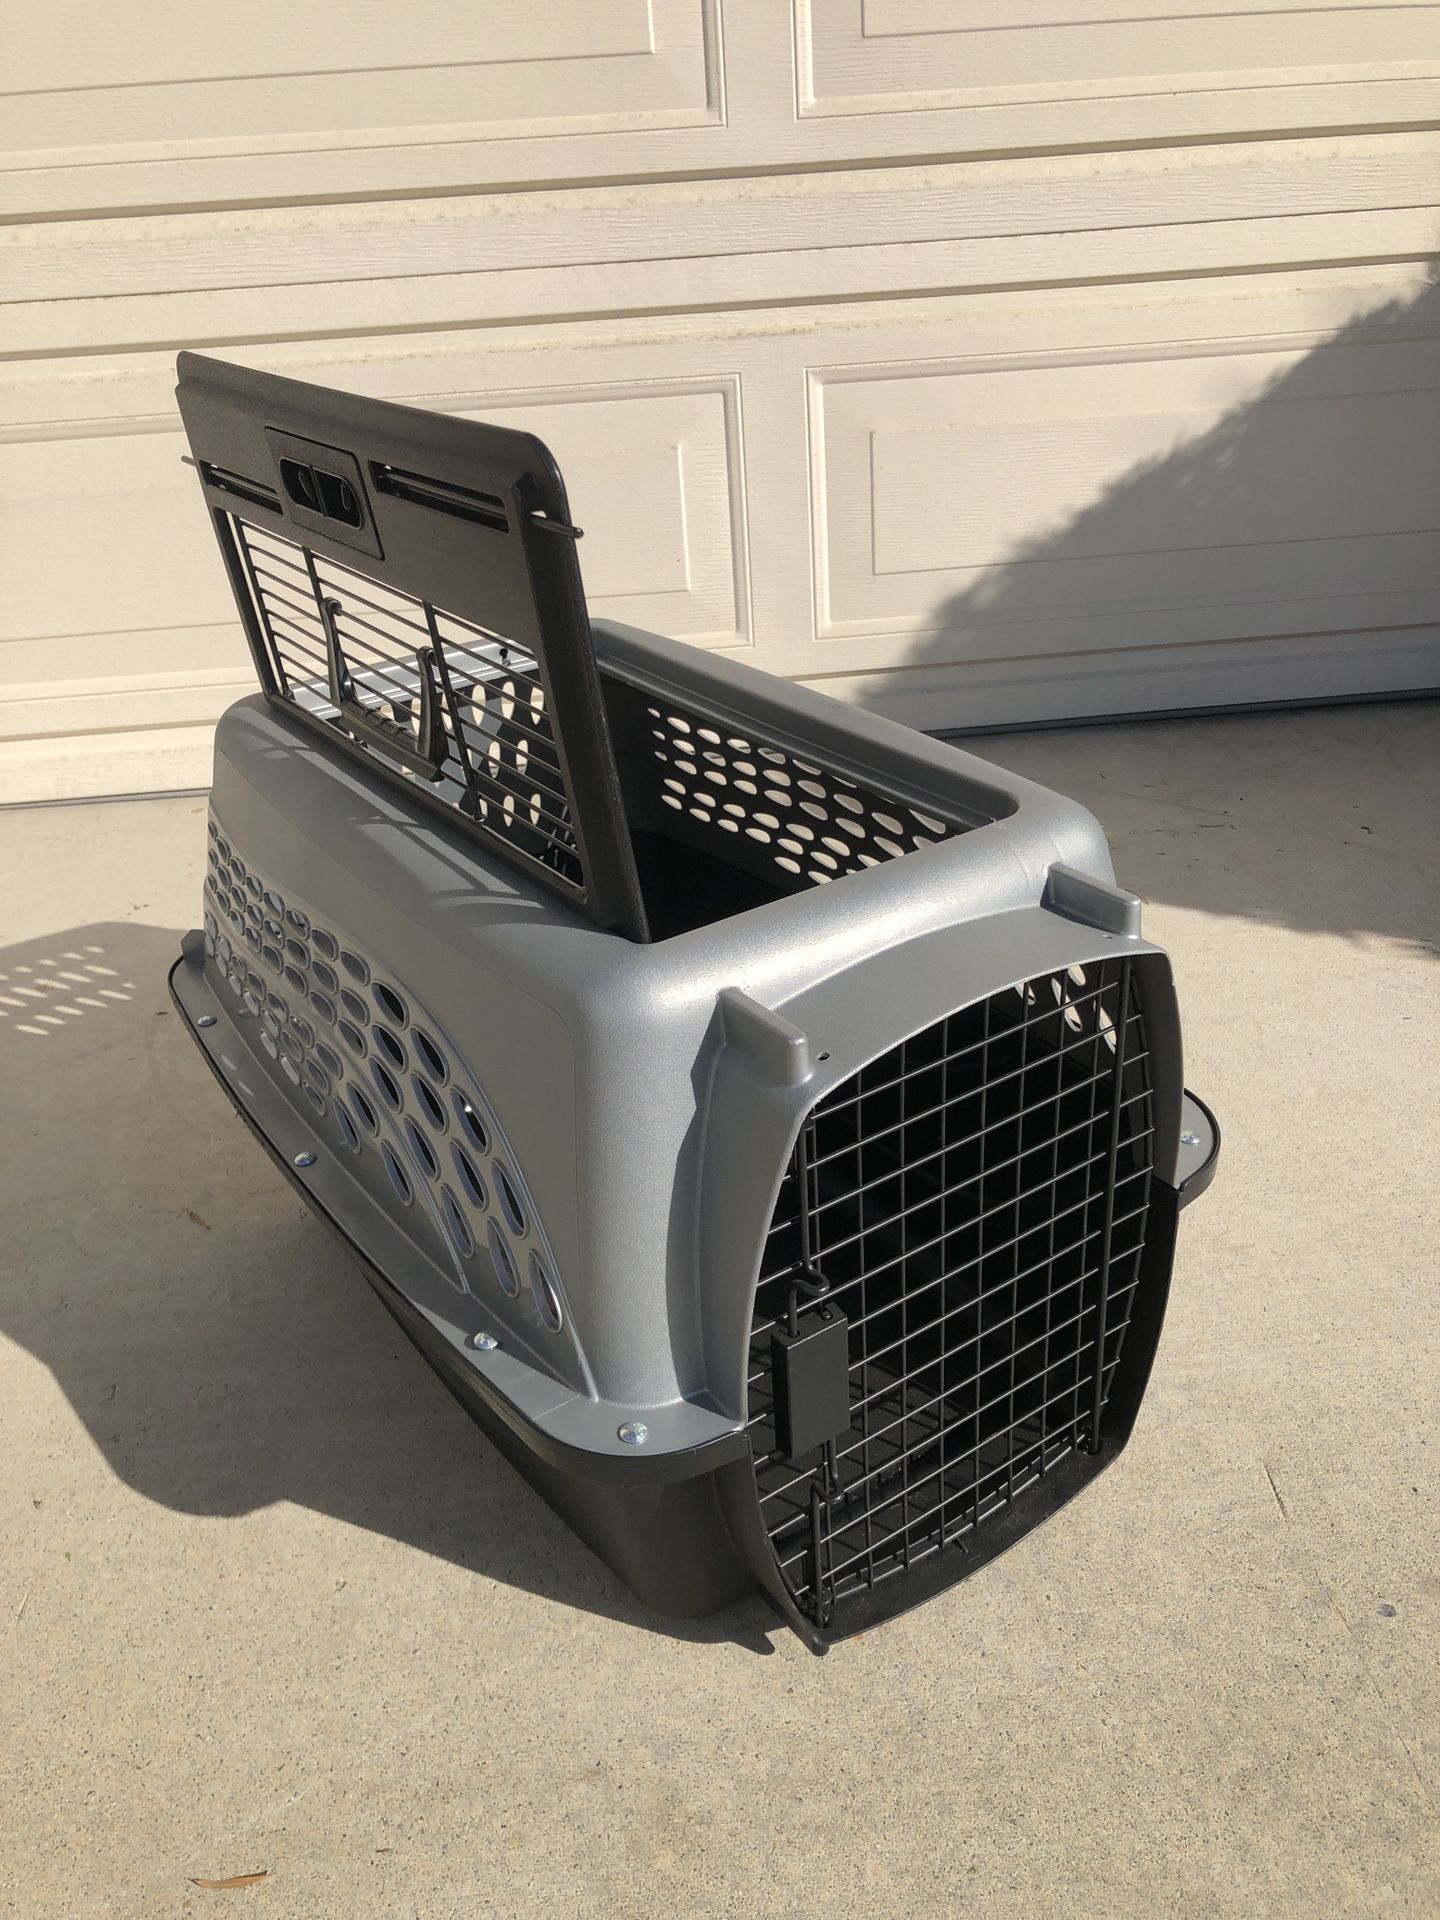 24” Puppy transporter, Dog cage, pet carrier, kennel